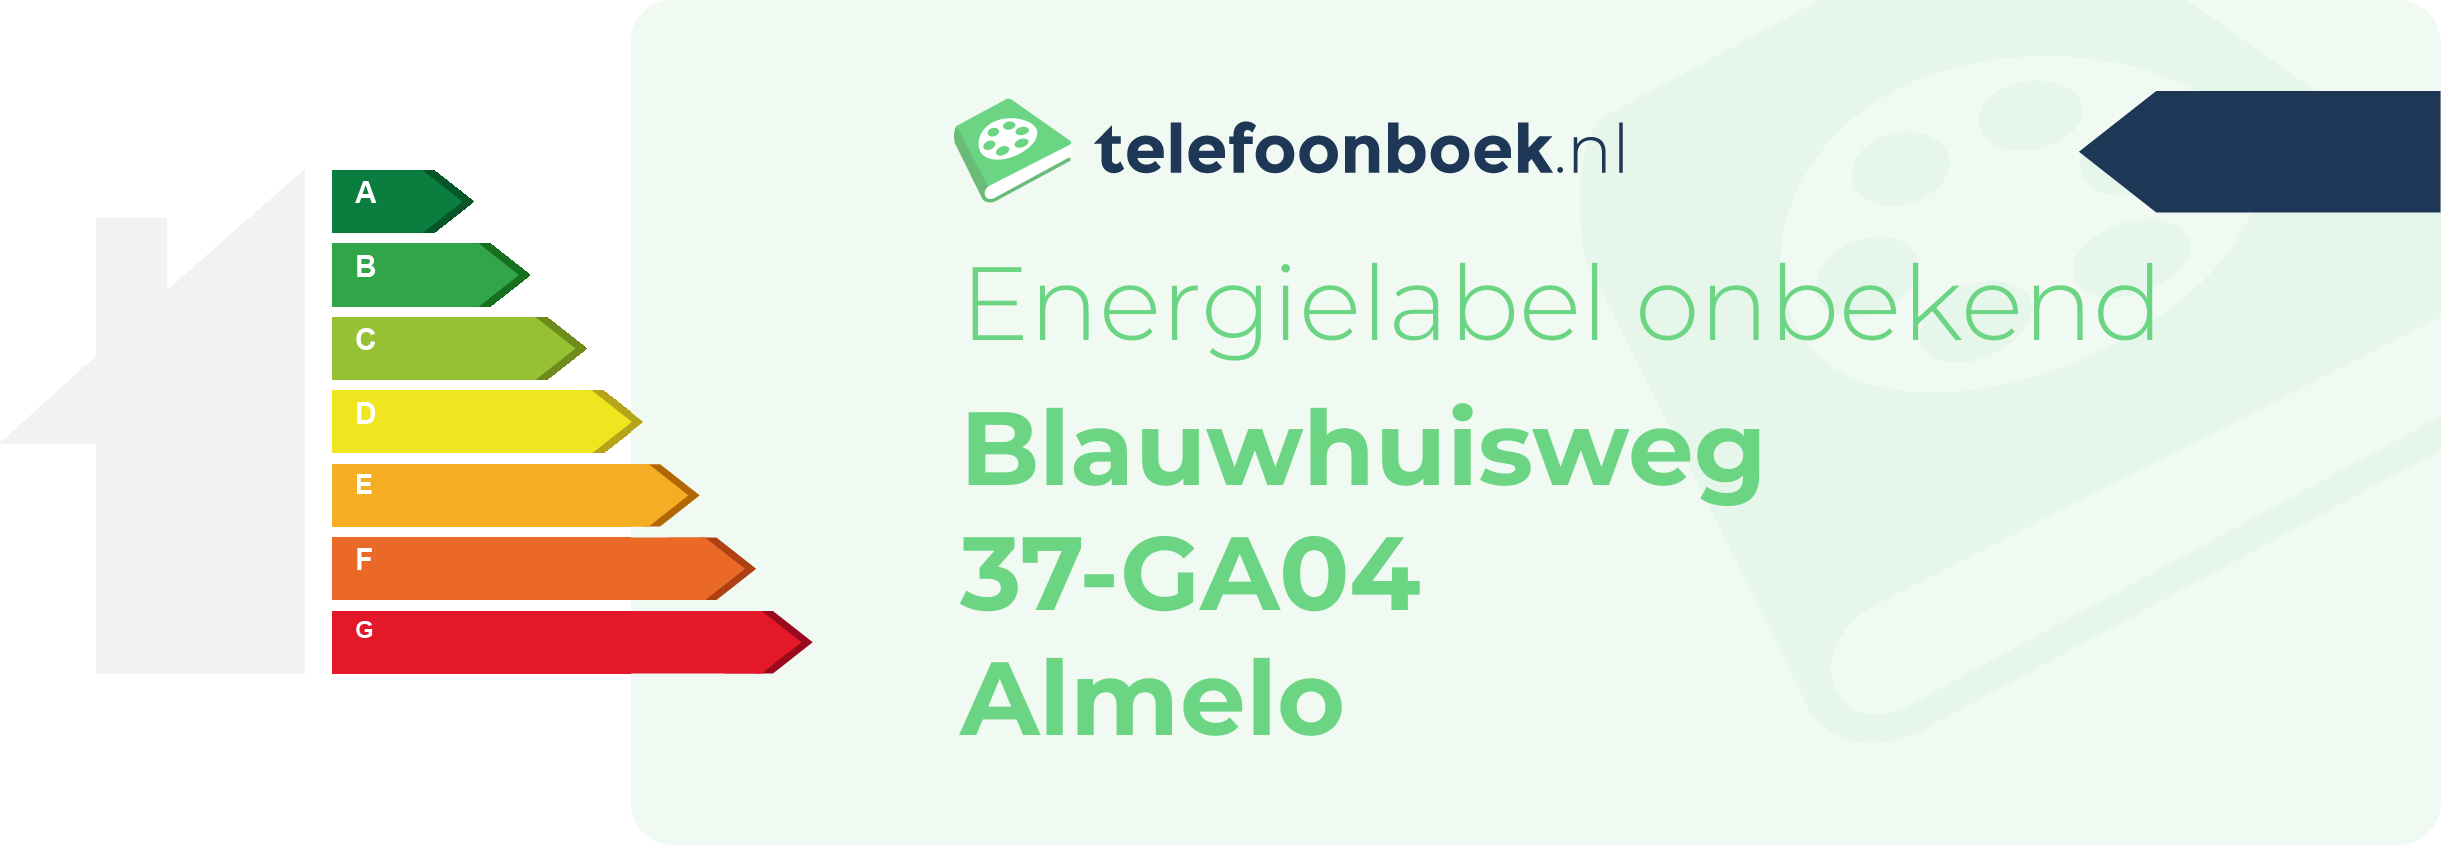 Energielabel Blauwhuisweg 37-GA04 Almelo